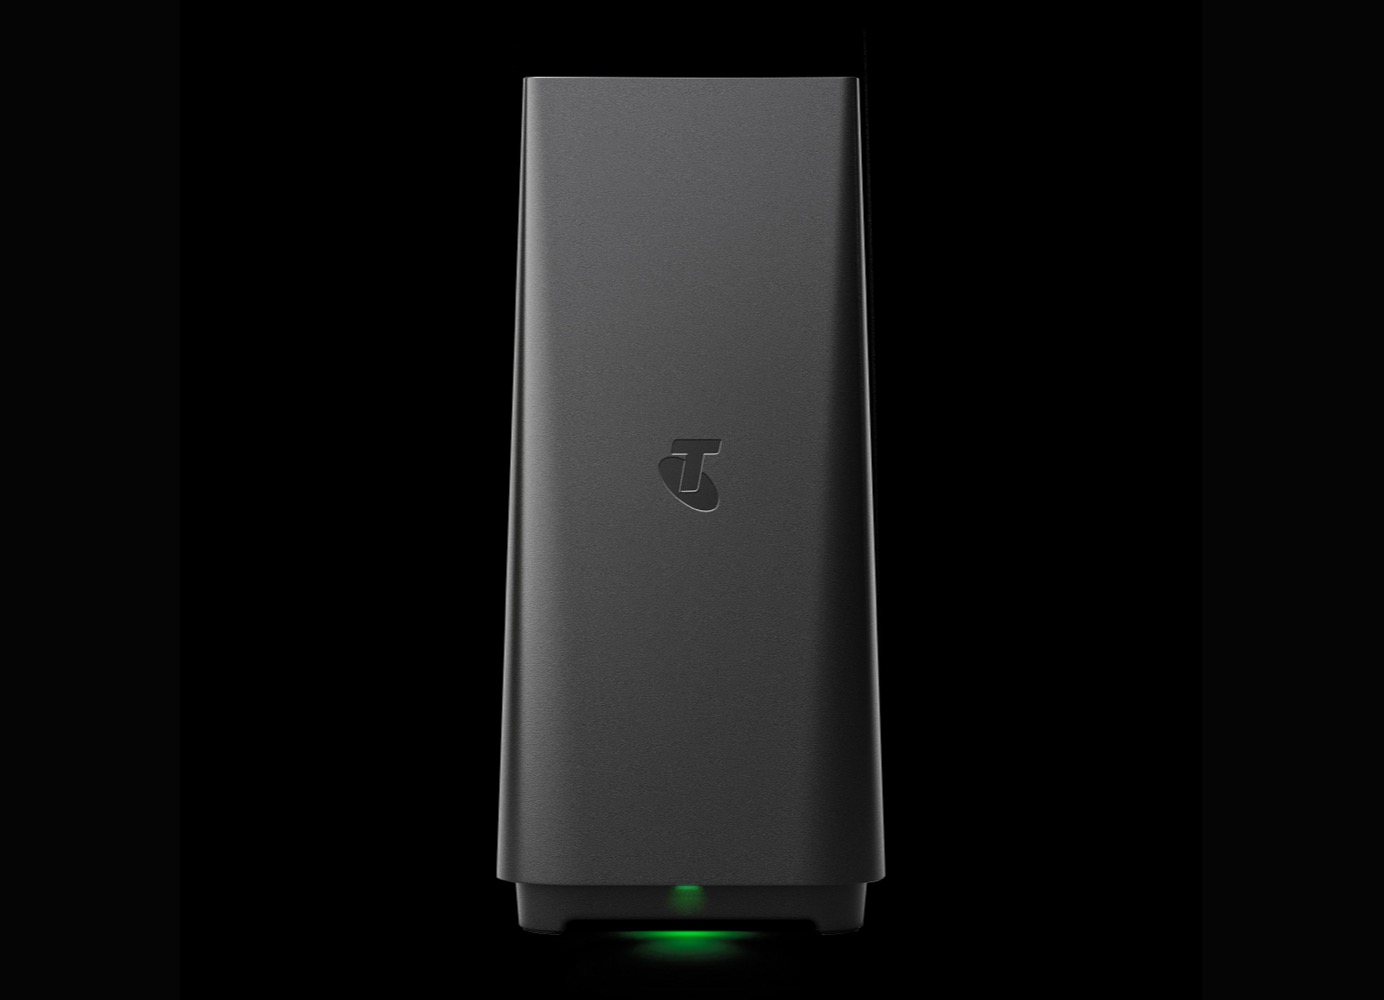 The Telstra Smart Modem 3 on a black background.